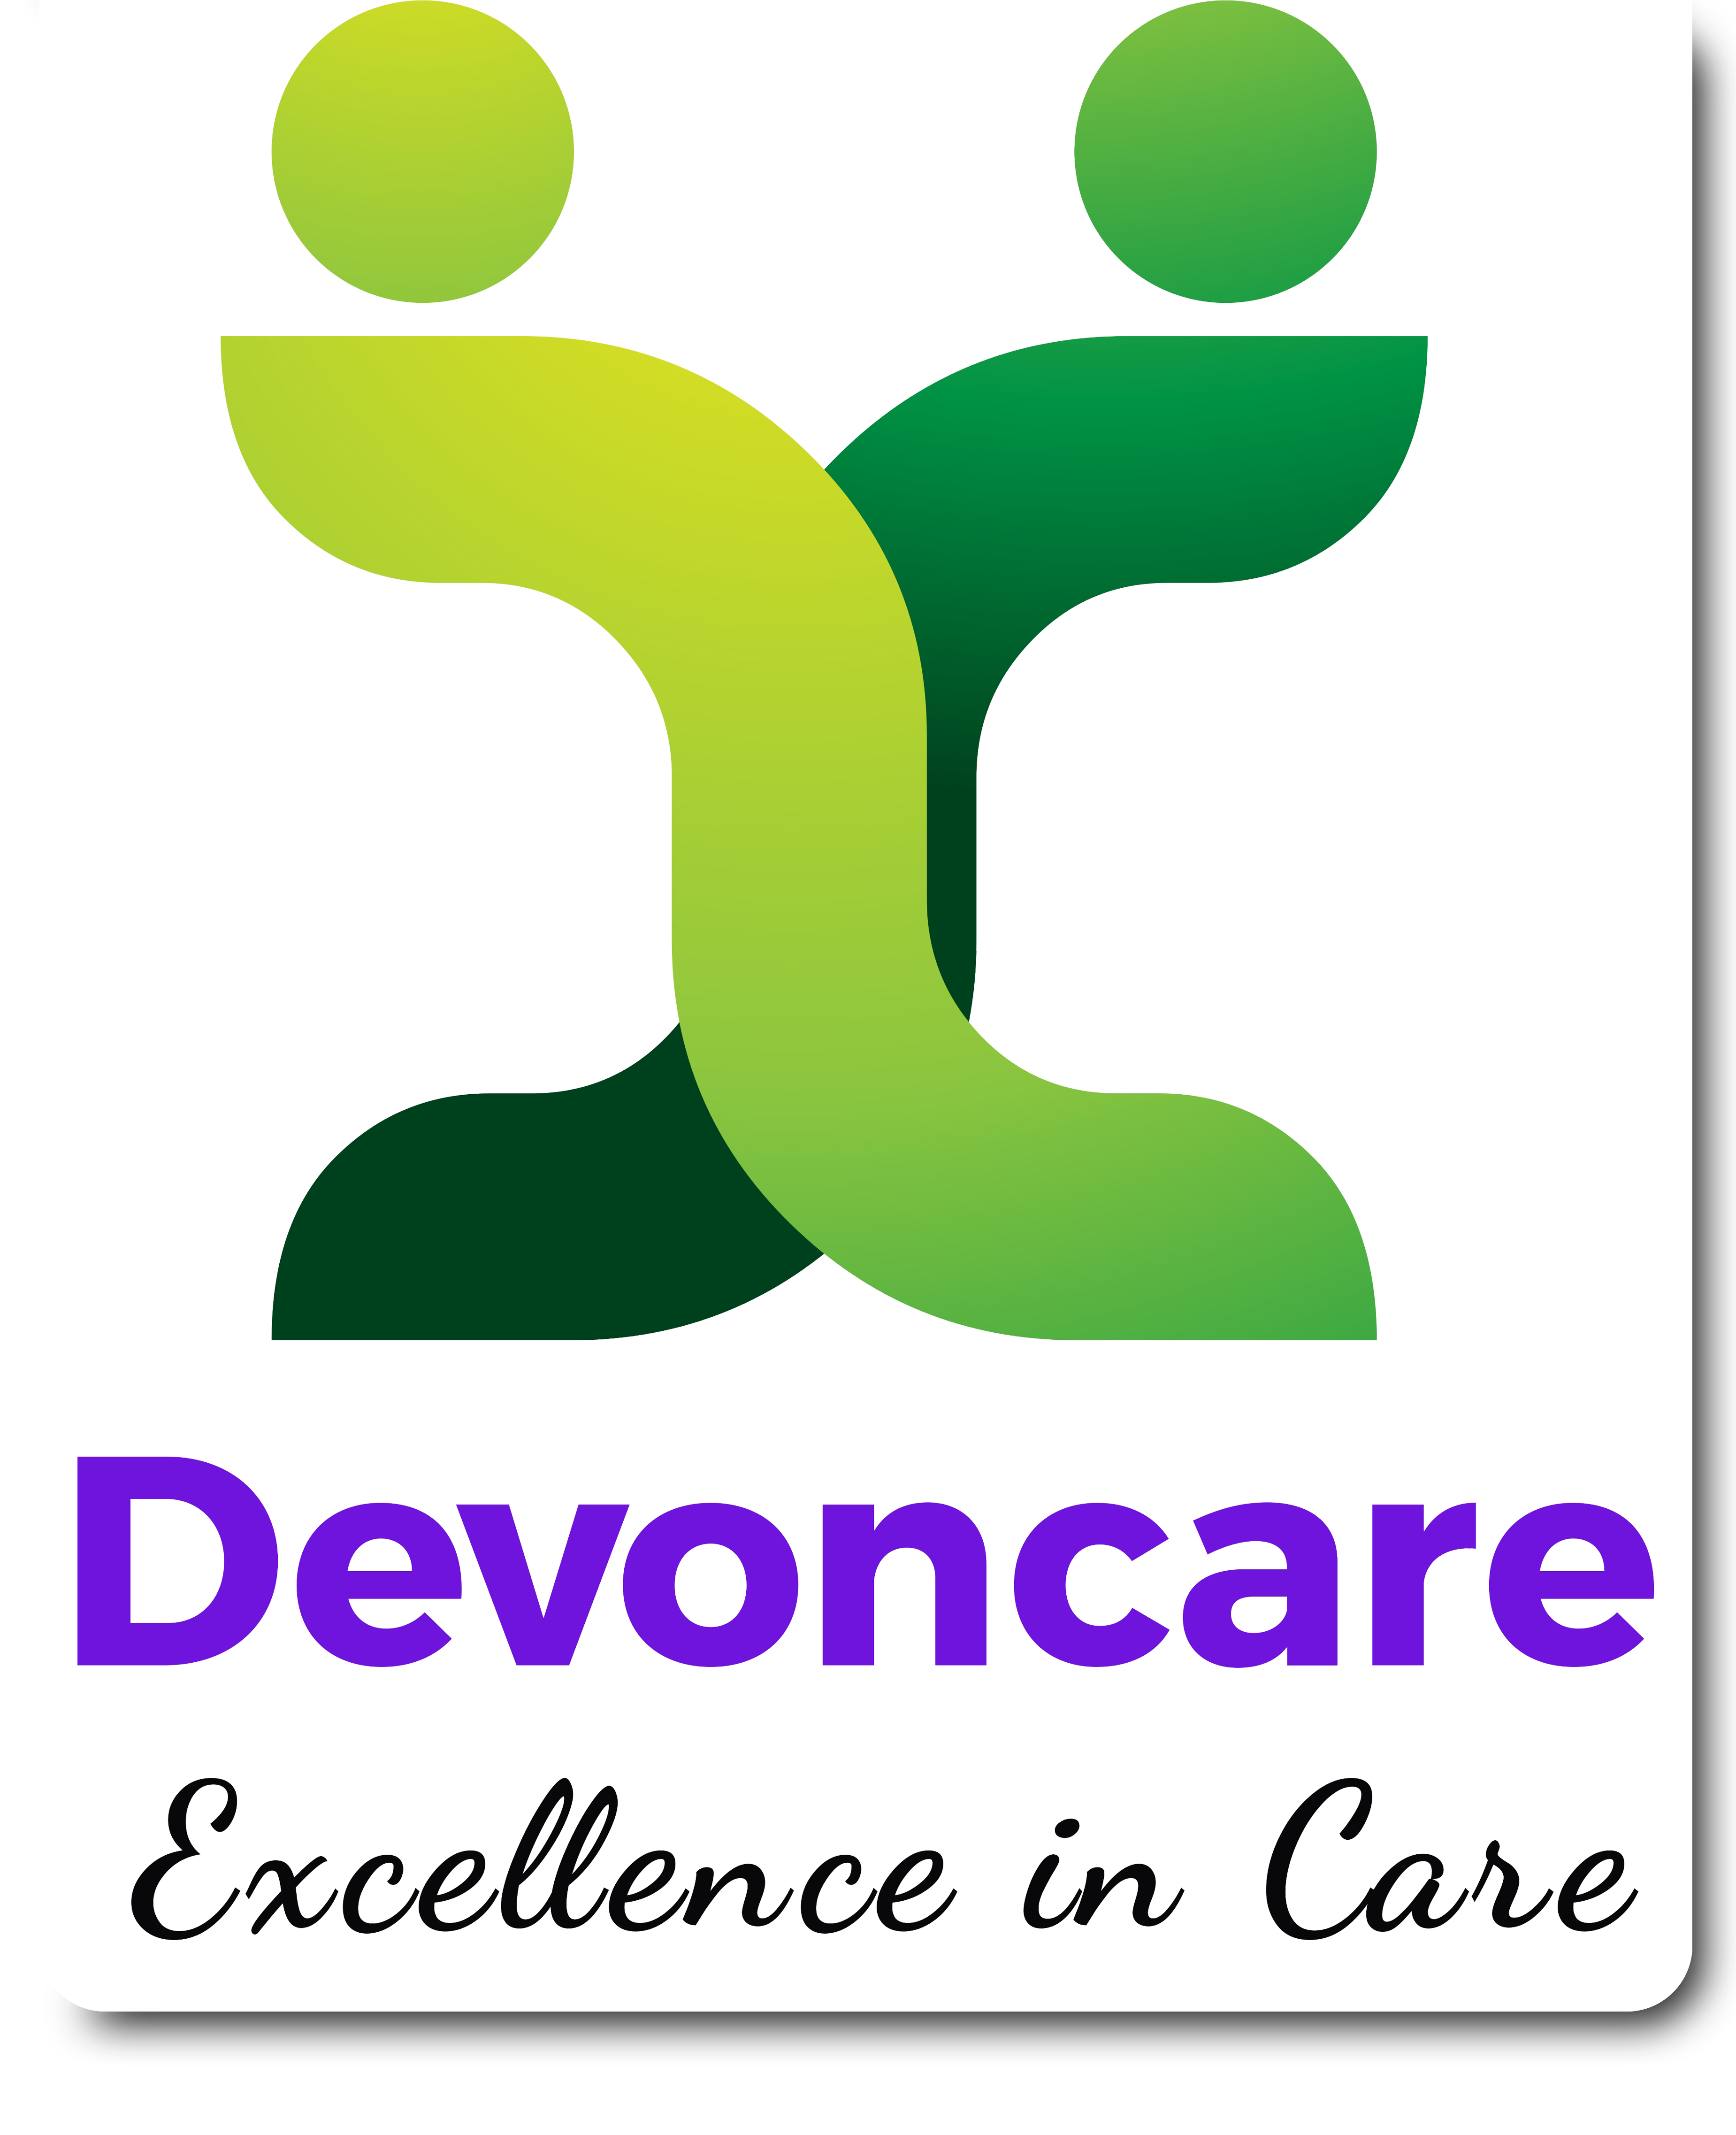 Welcome to Devoncare - Home Care in Devon and Cornwall Devoncare